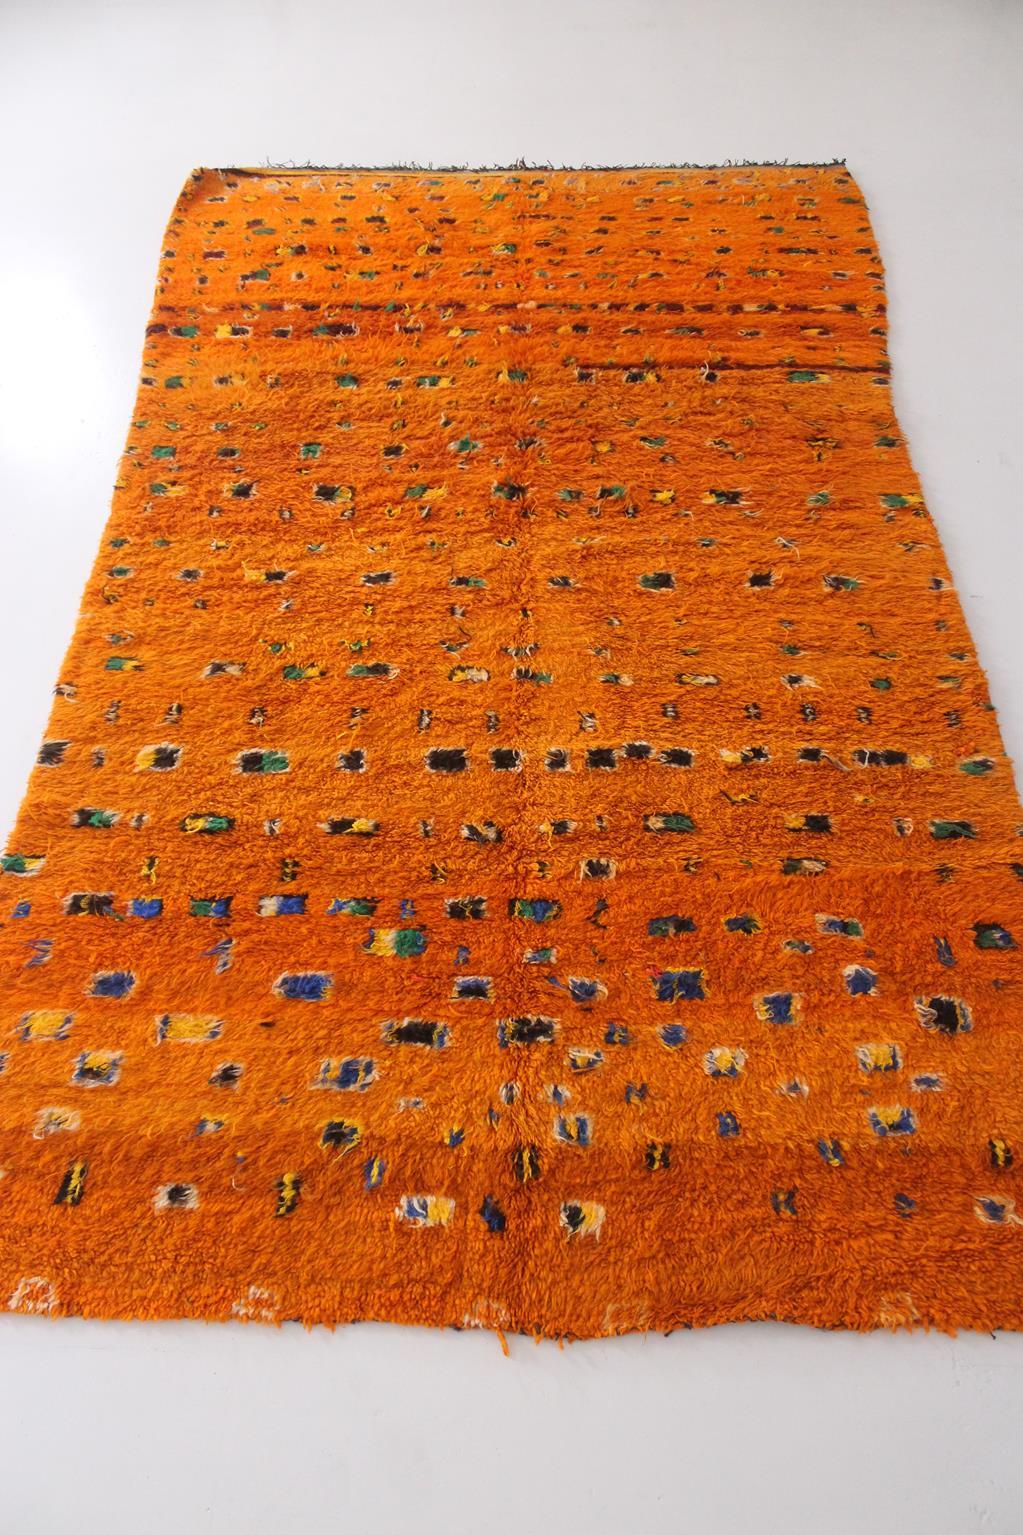 Vintage Moroccan wool rug - Orange - 6.5x10.5feet / 198x320cm For Sale 4